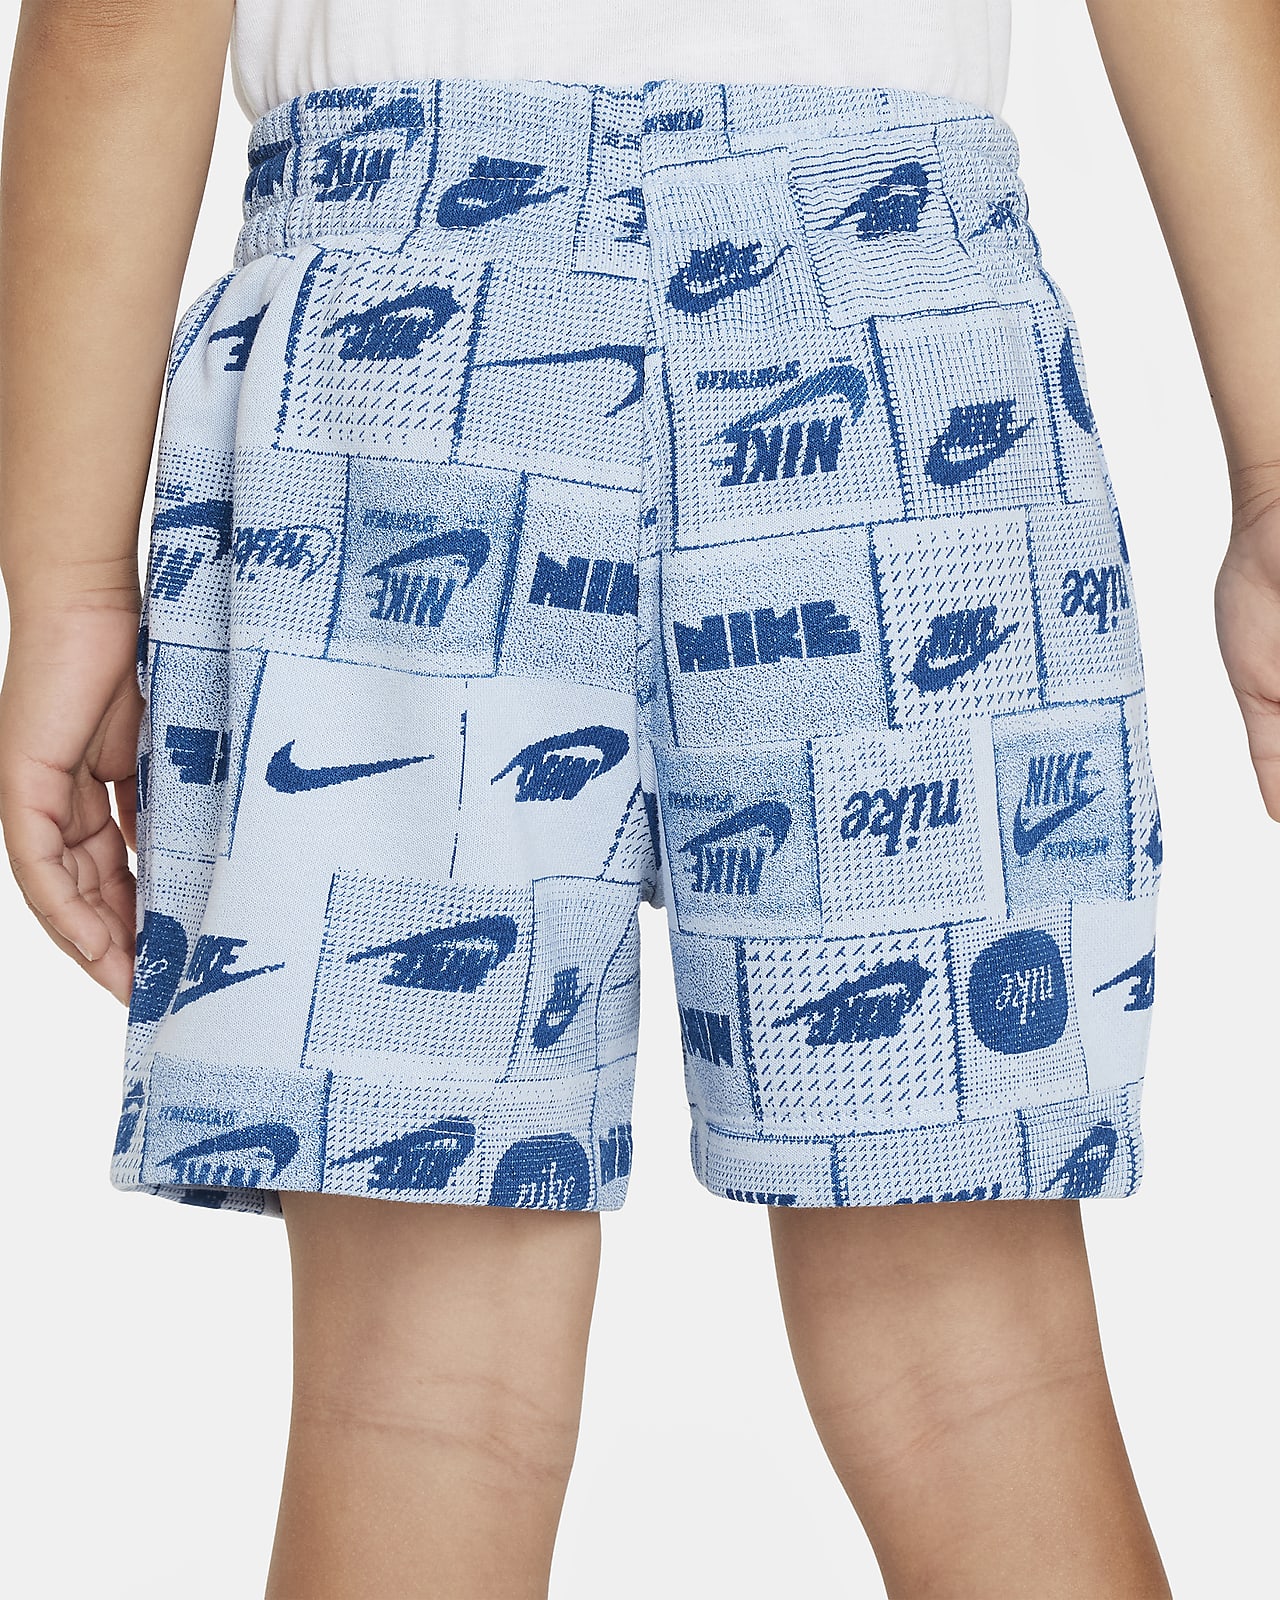 Toddler Shorts. Sportswear Nike Printed Club